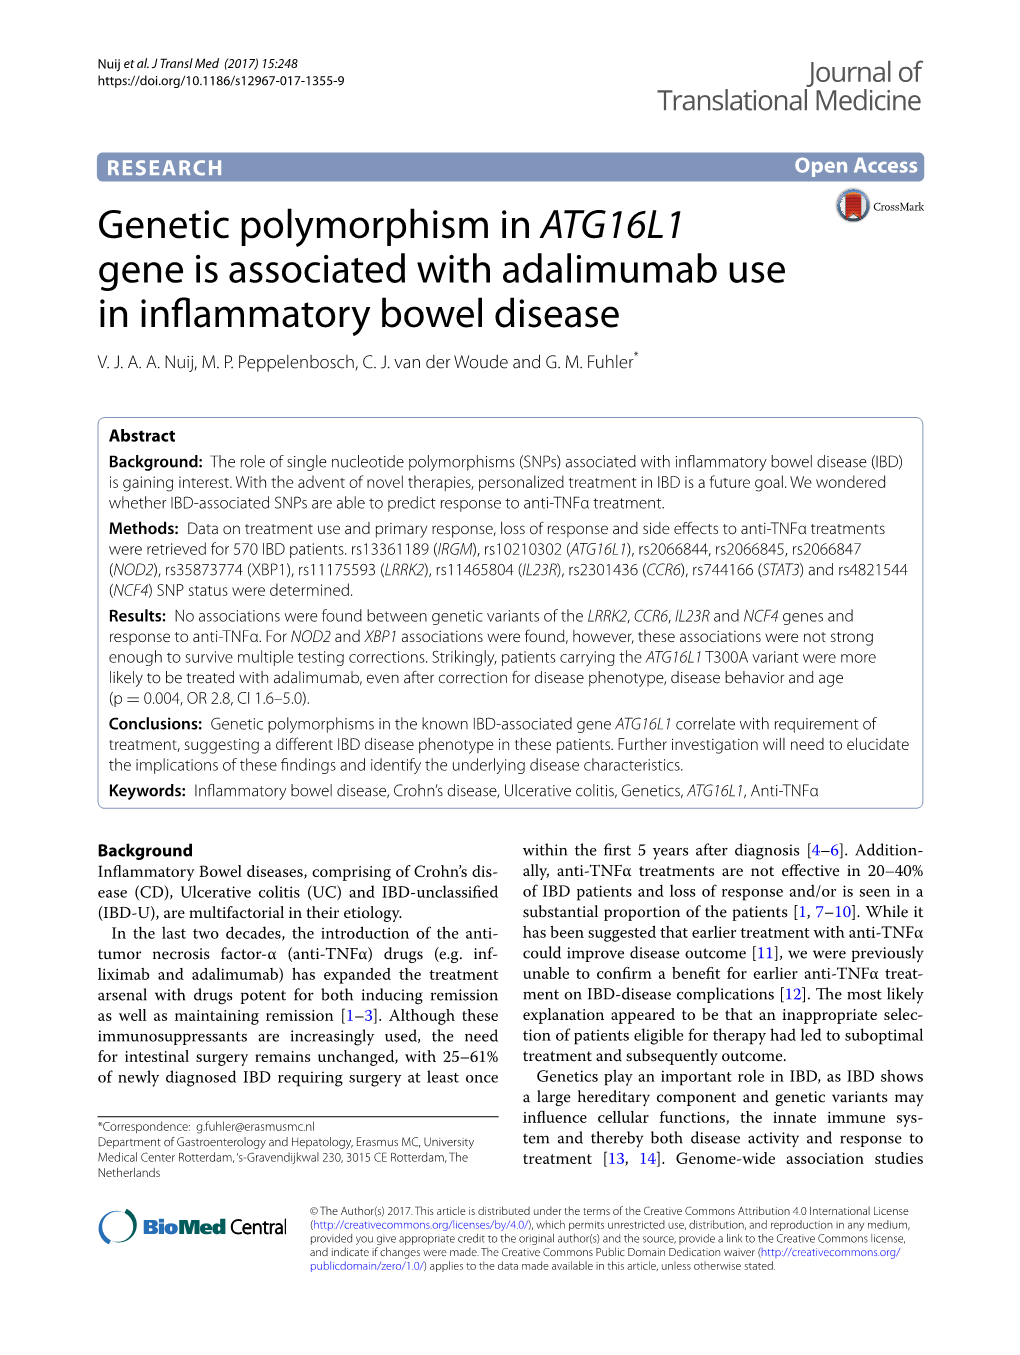 Genetic Polymorphism in ATG16L1 Gene Is Associated with Adalimumab Use in Infammatory Bowel Disease V